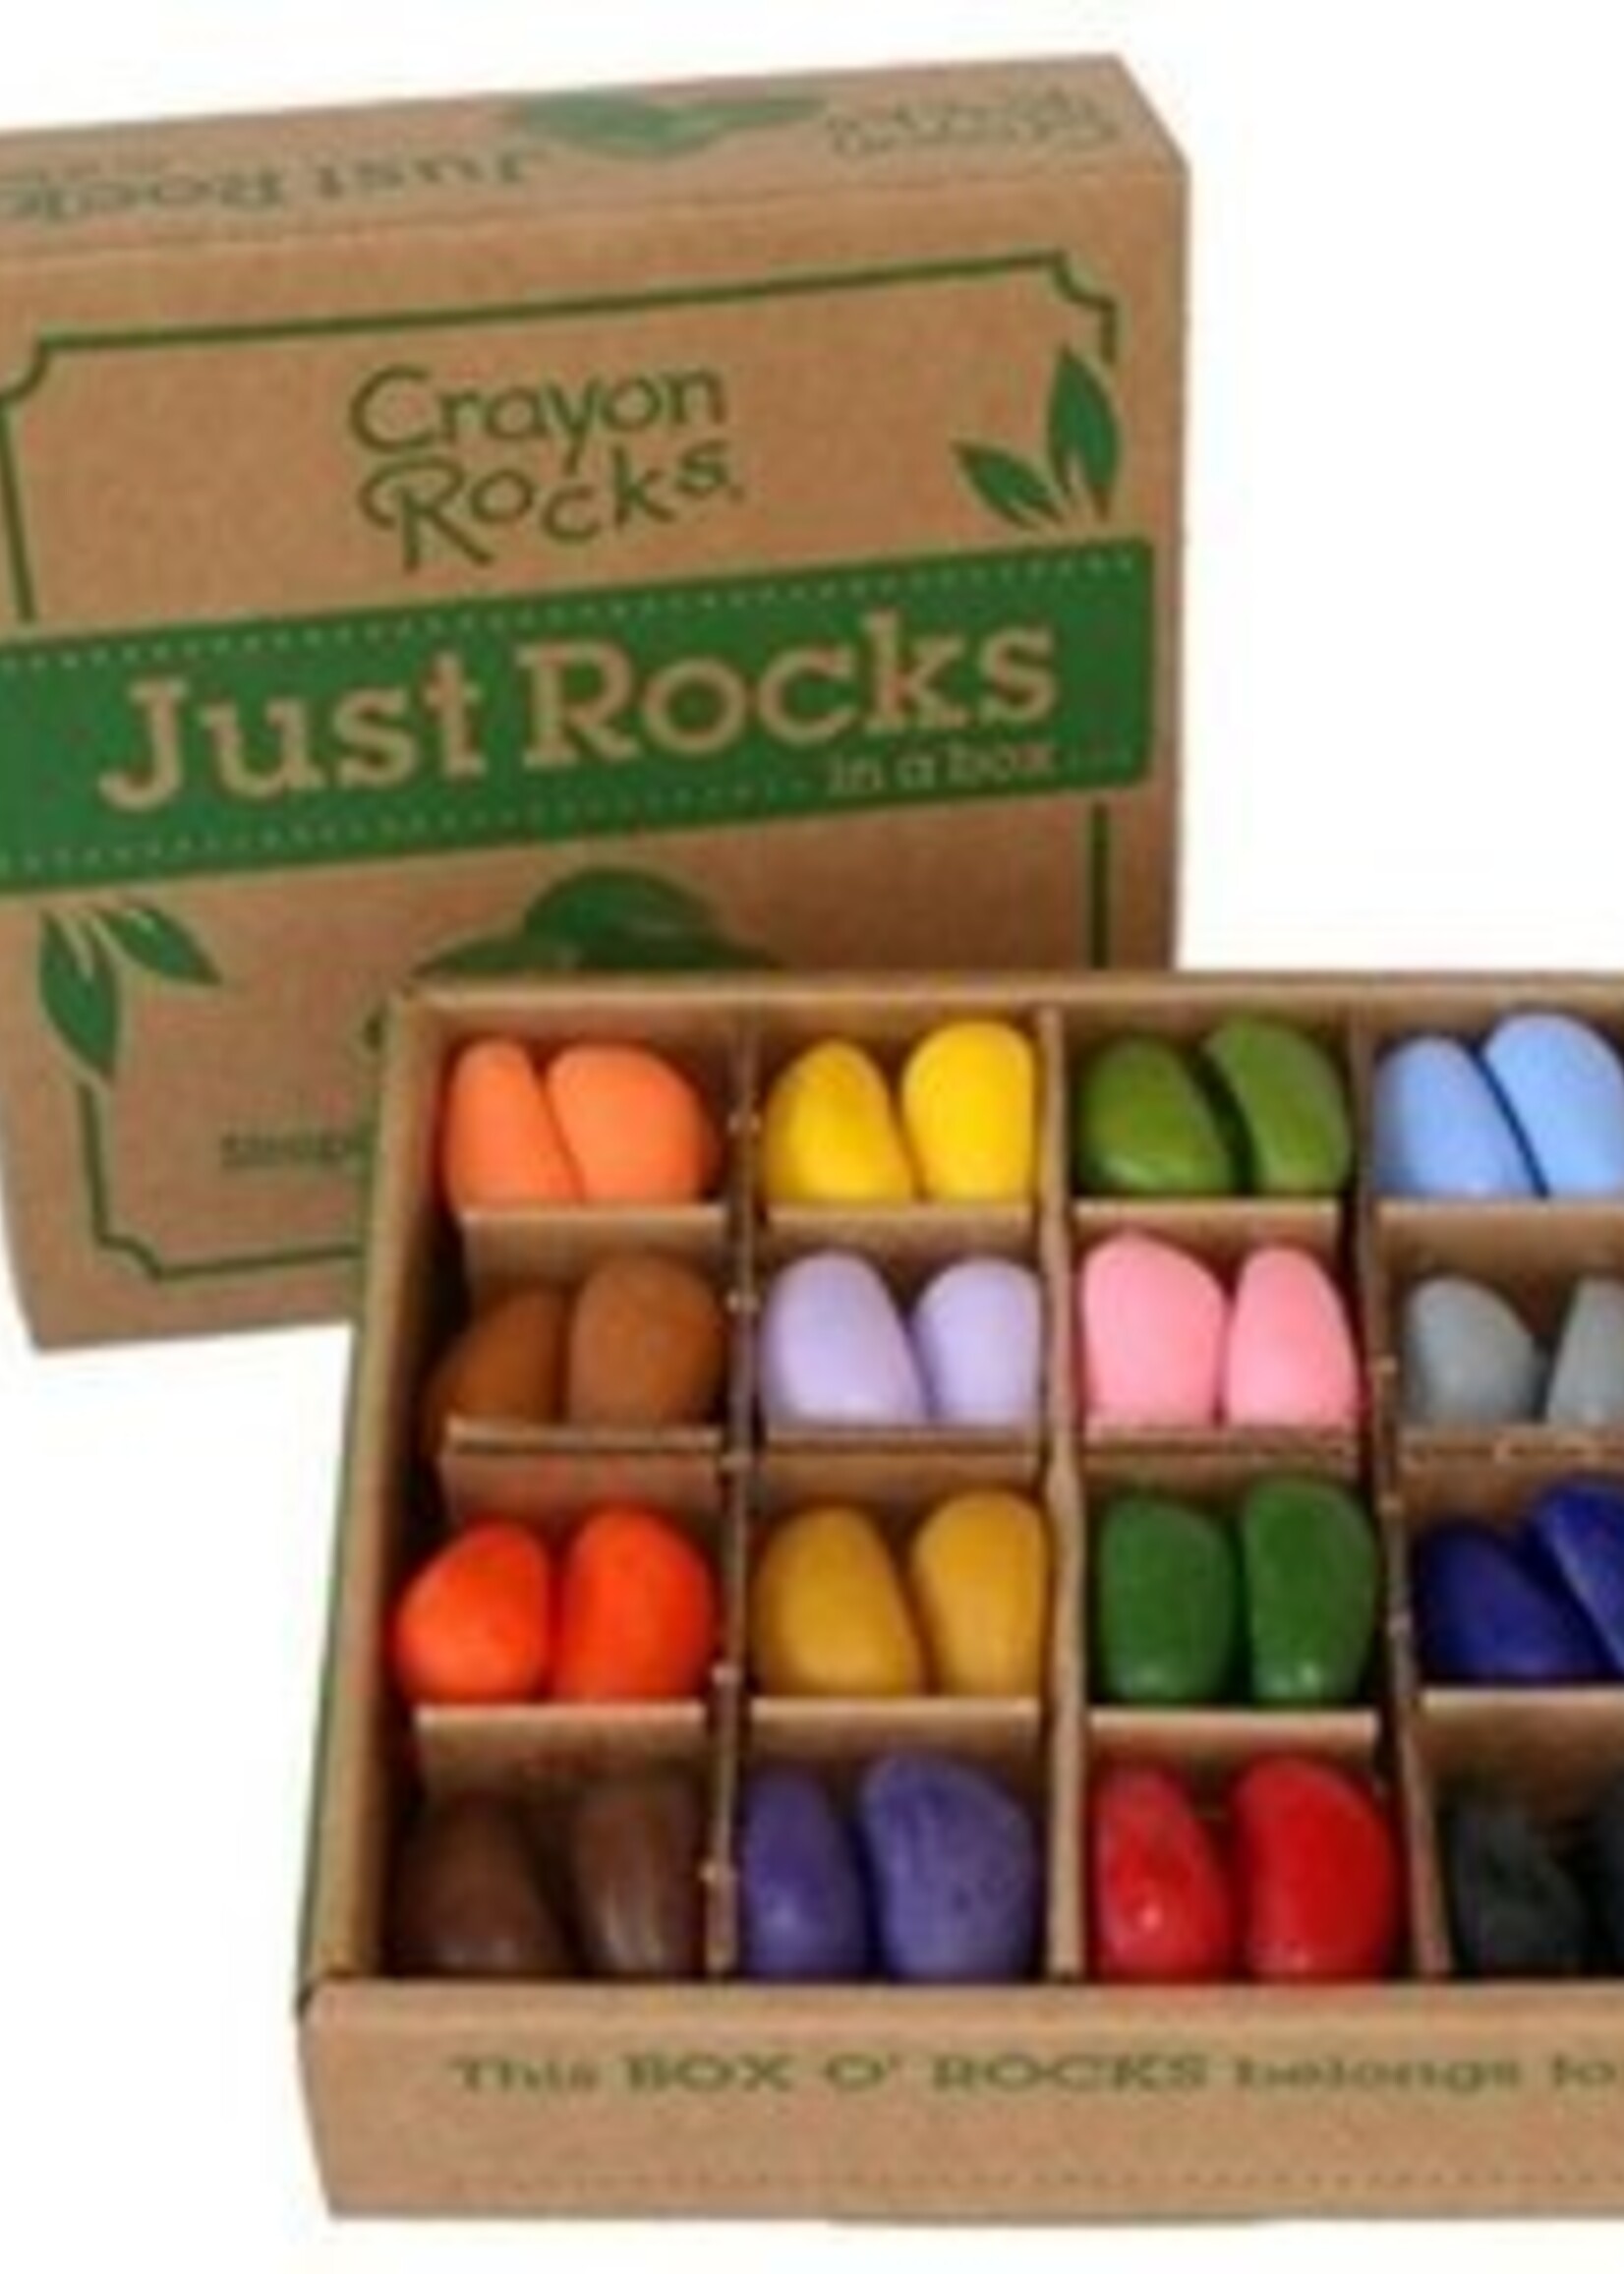 CrayonRocks Crayon rocks - Just Rocks doos met 64 sojawaskrijtjes